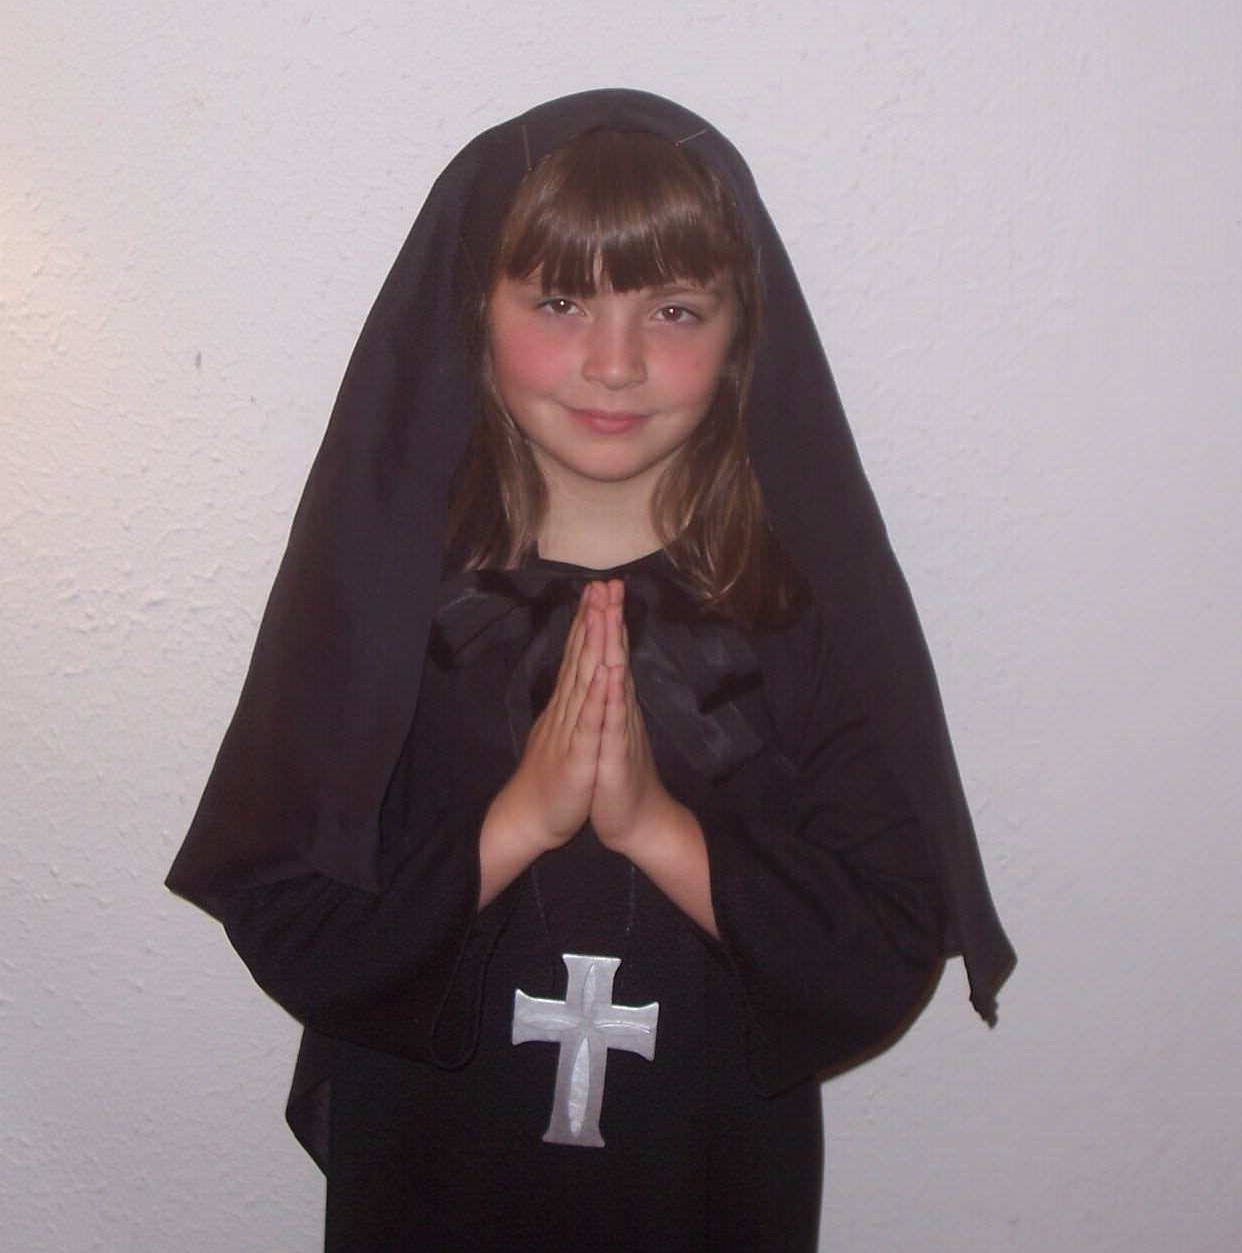 Third grade student as saint